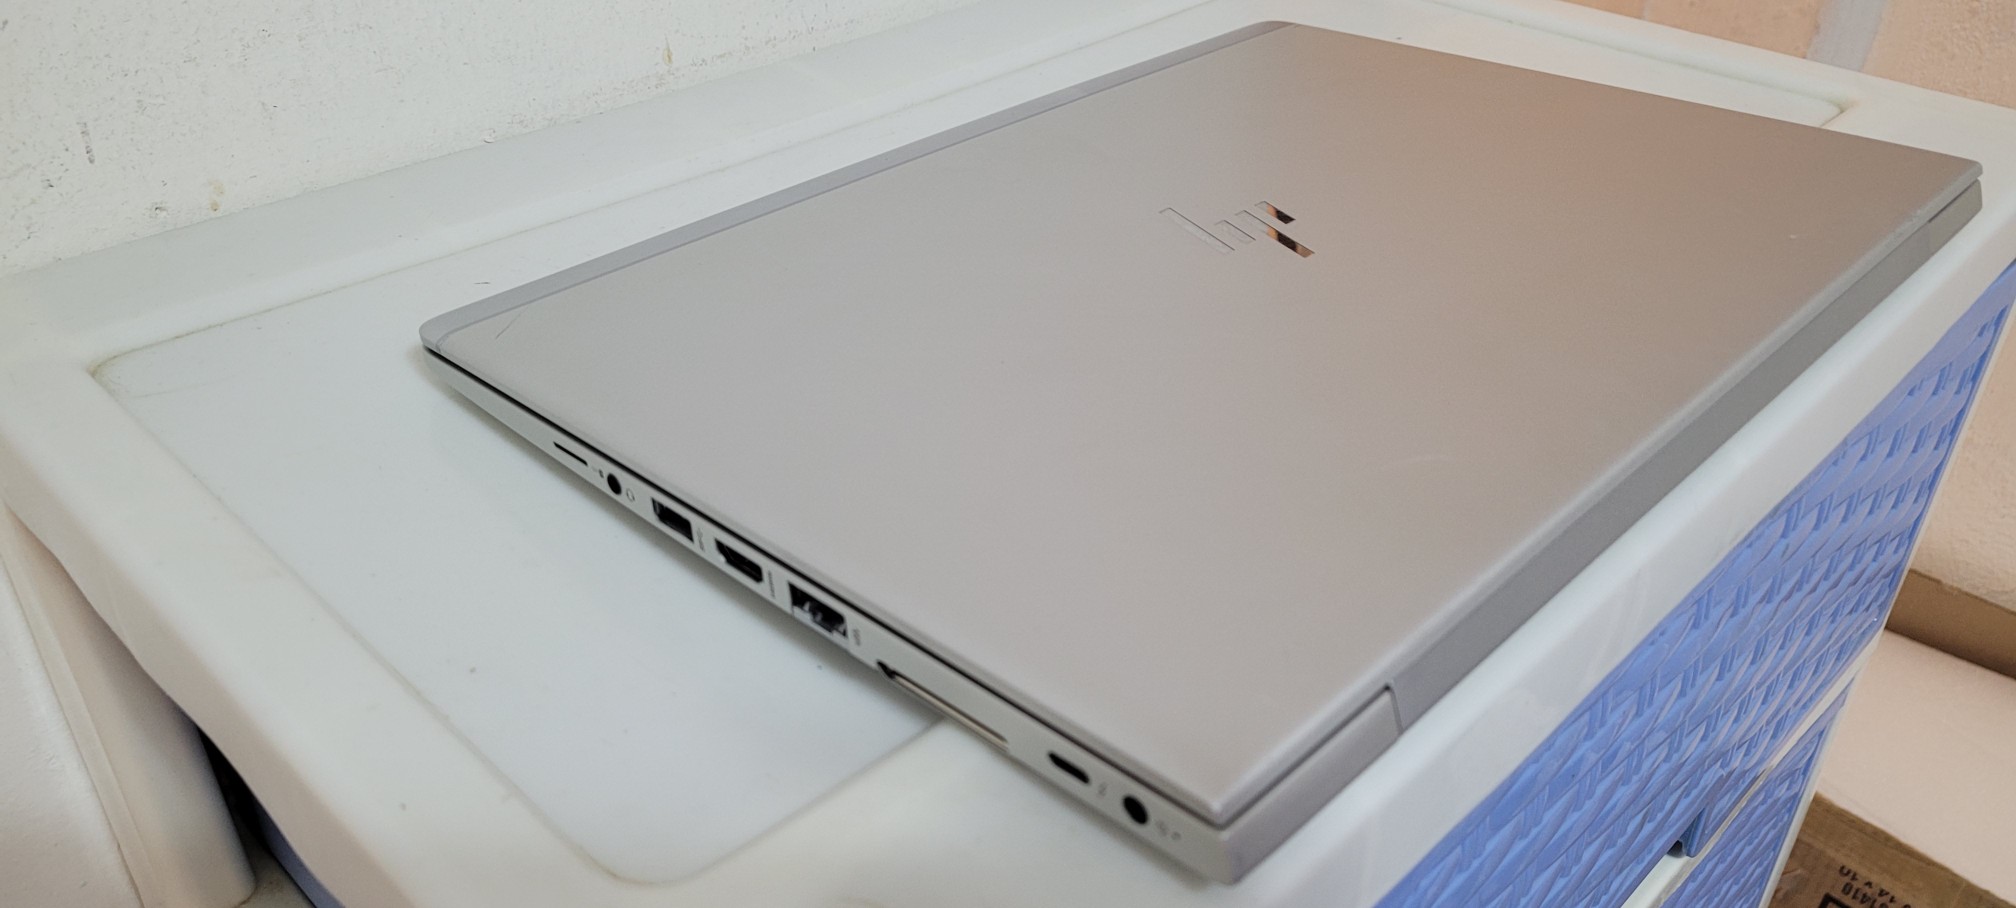 computadoras y laptops - laptop hp 14 Pulg Core i5 7ma Gen Ram 8gb ddr4 Disco 256gb SSD 1080p 2